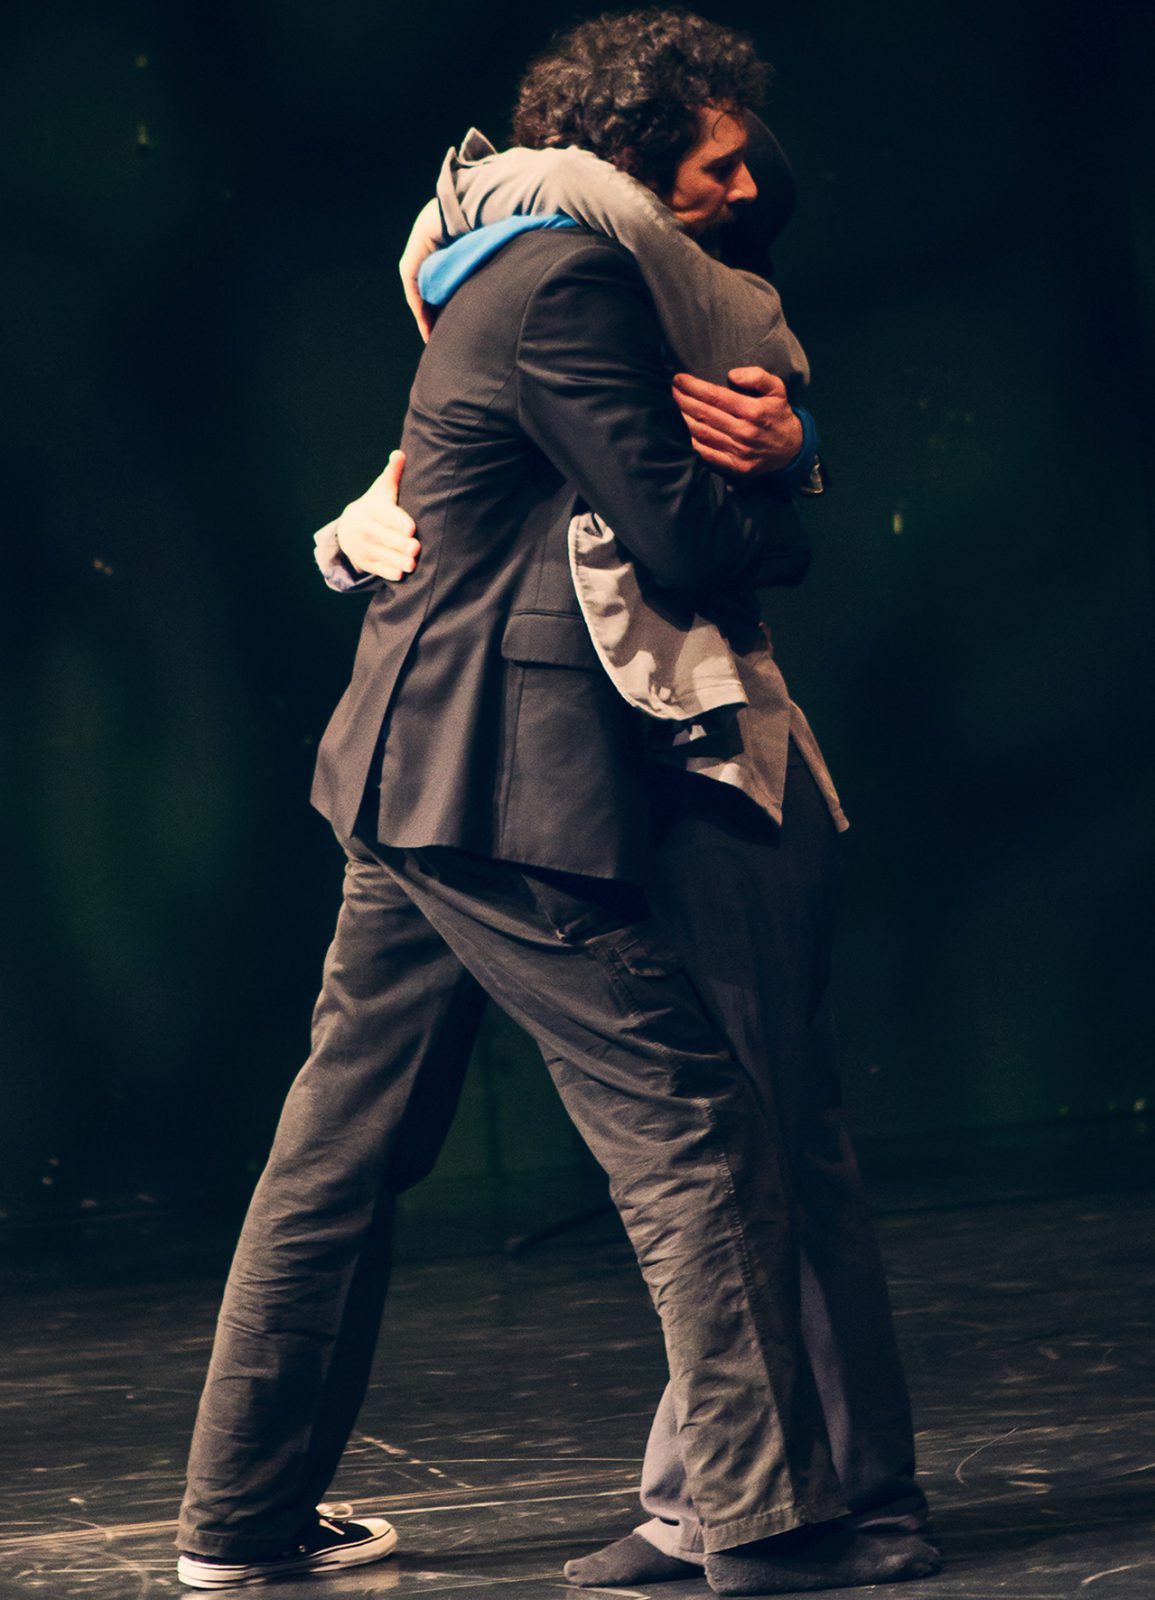 zwei Männer umarmen sich